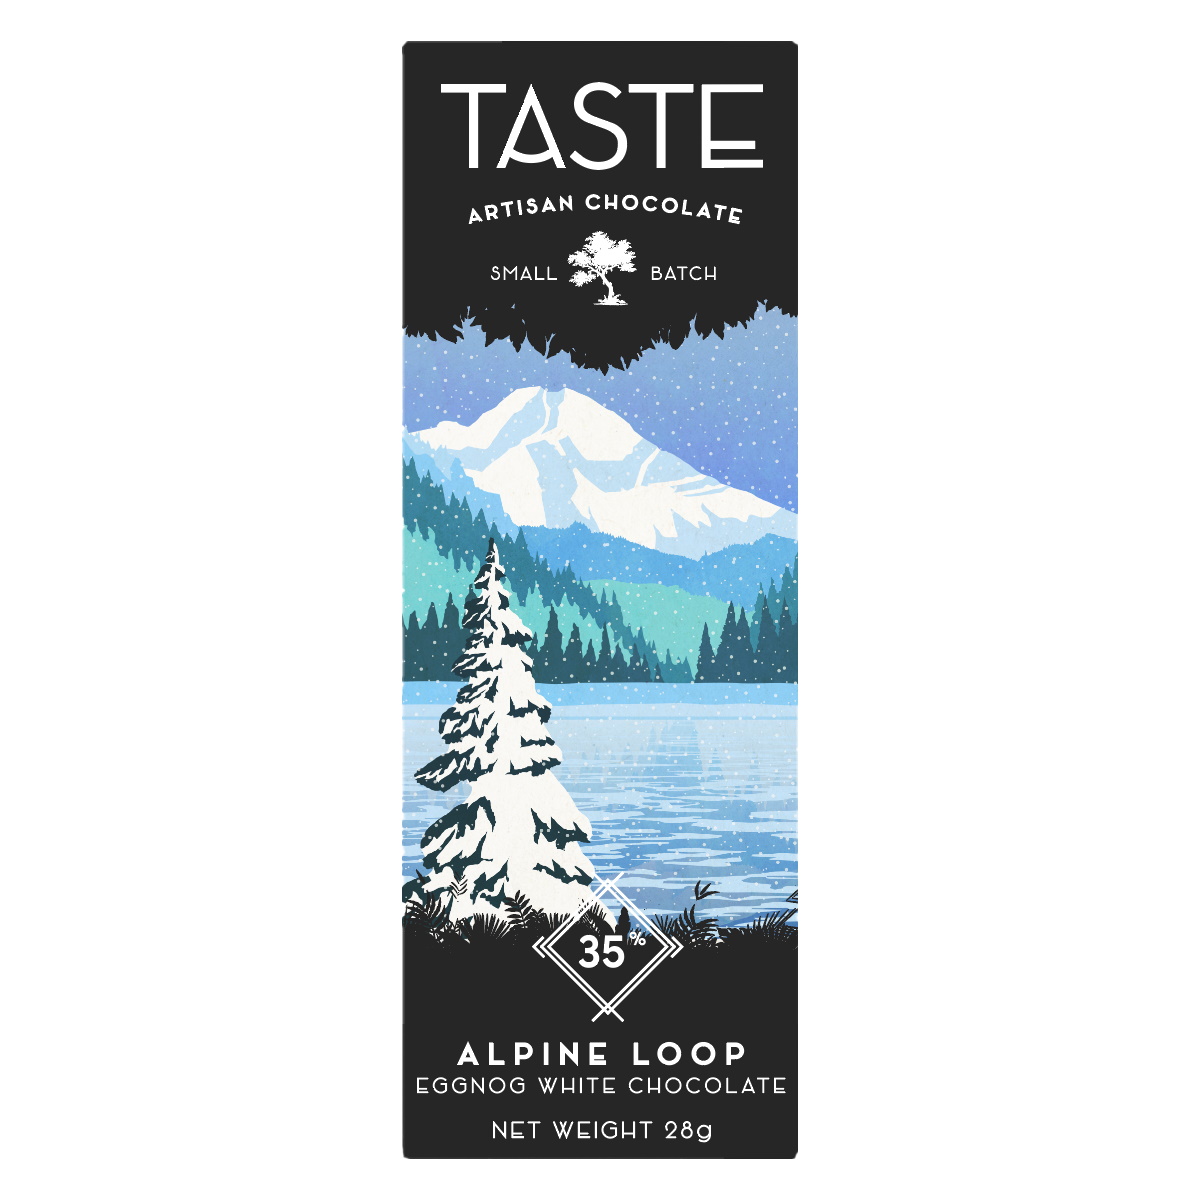 Taste Artisan Chocolate Alpine Loop 35% White Chocolate Bar with Eggnog